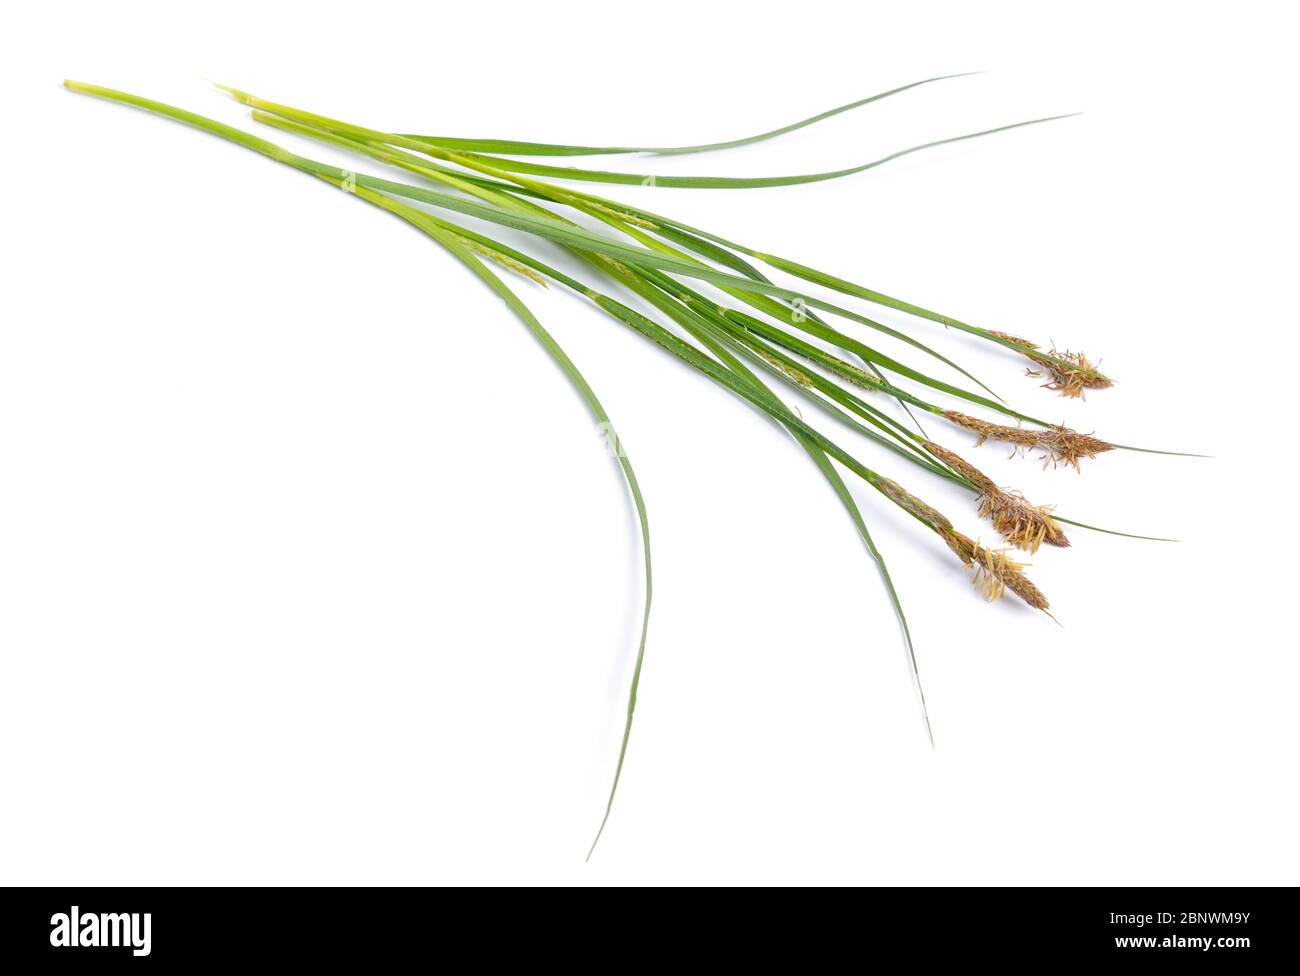 Carex or true sedges, caricology. Isolated on white background Stock Photo